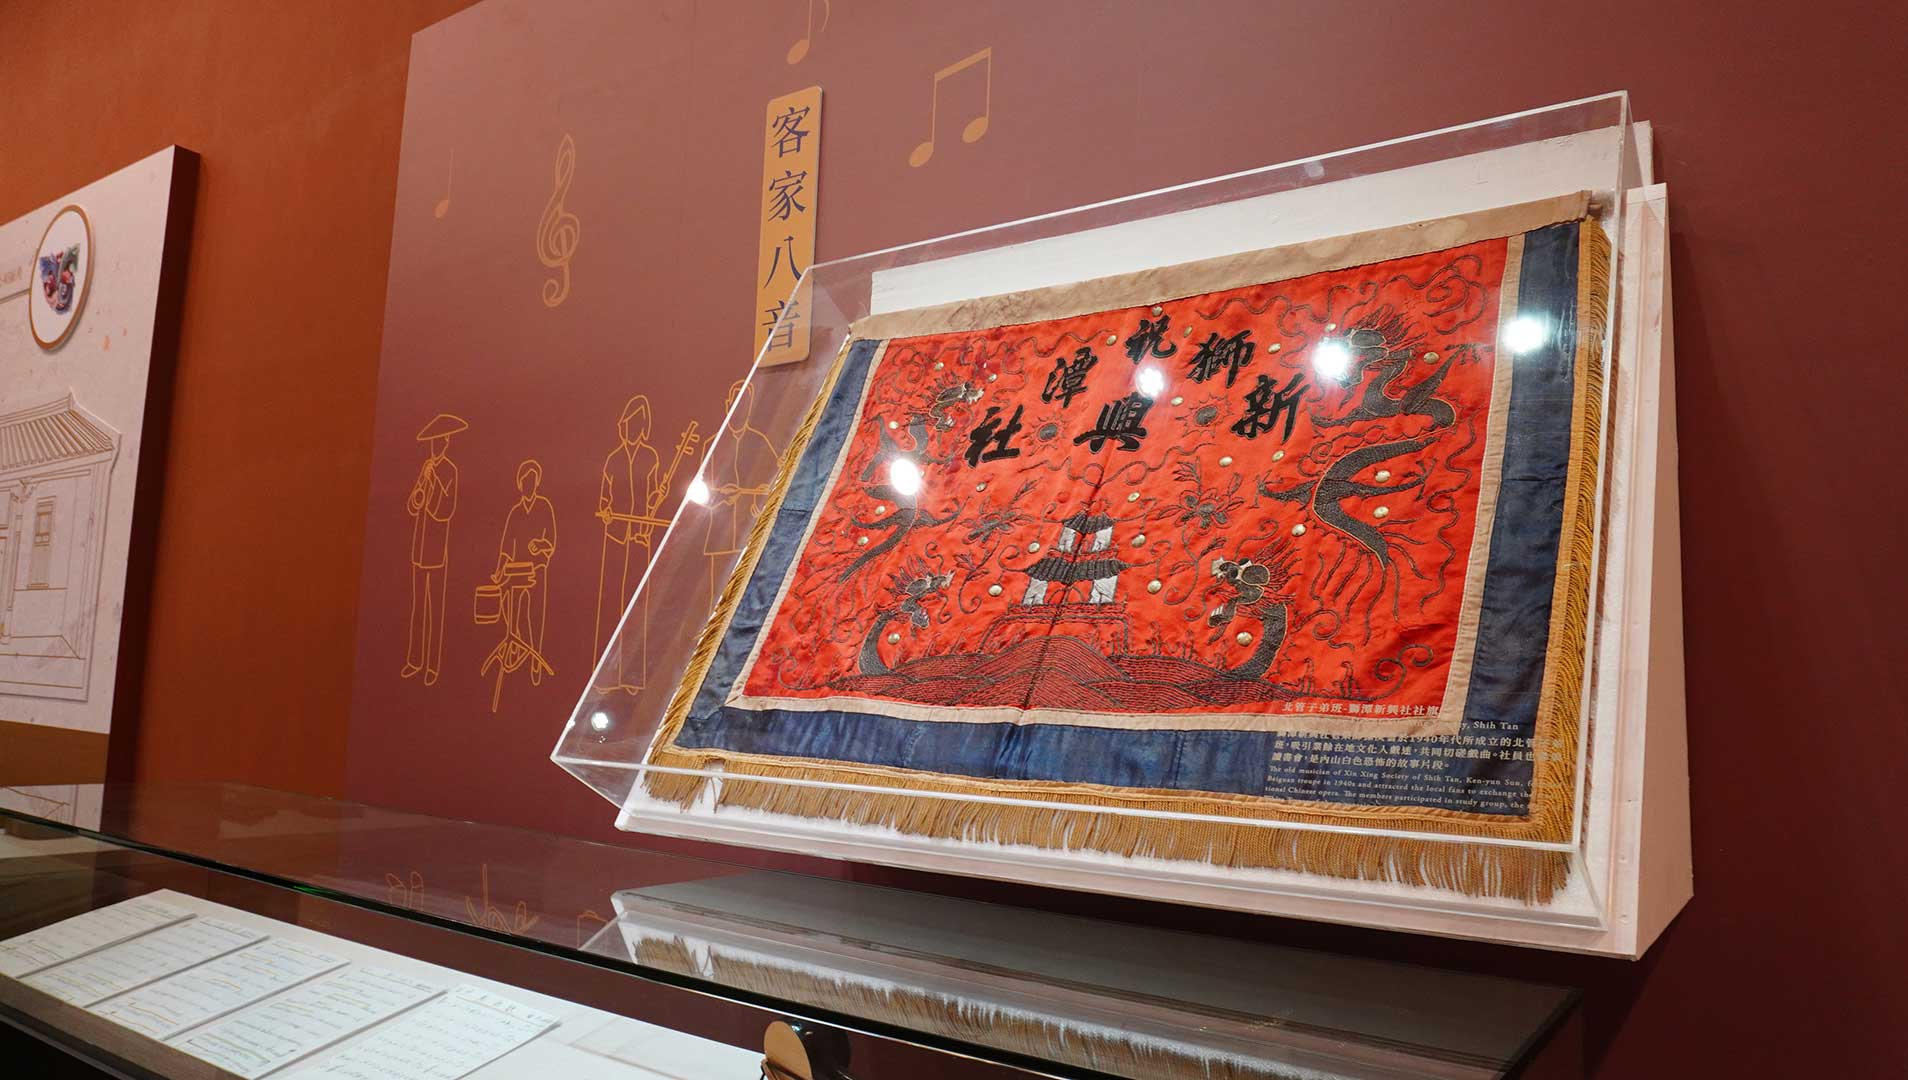 Hakka Collection 2 consists of Chuang Tsai-Hsiang’s Bayin handschrift and the flag of Shitan Hsin Hsing Beiguan music club.